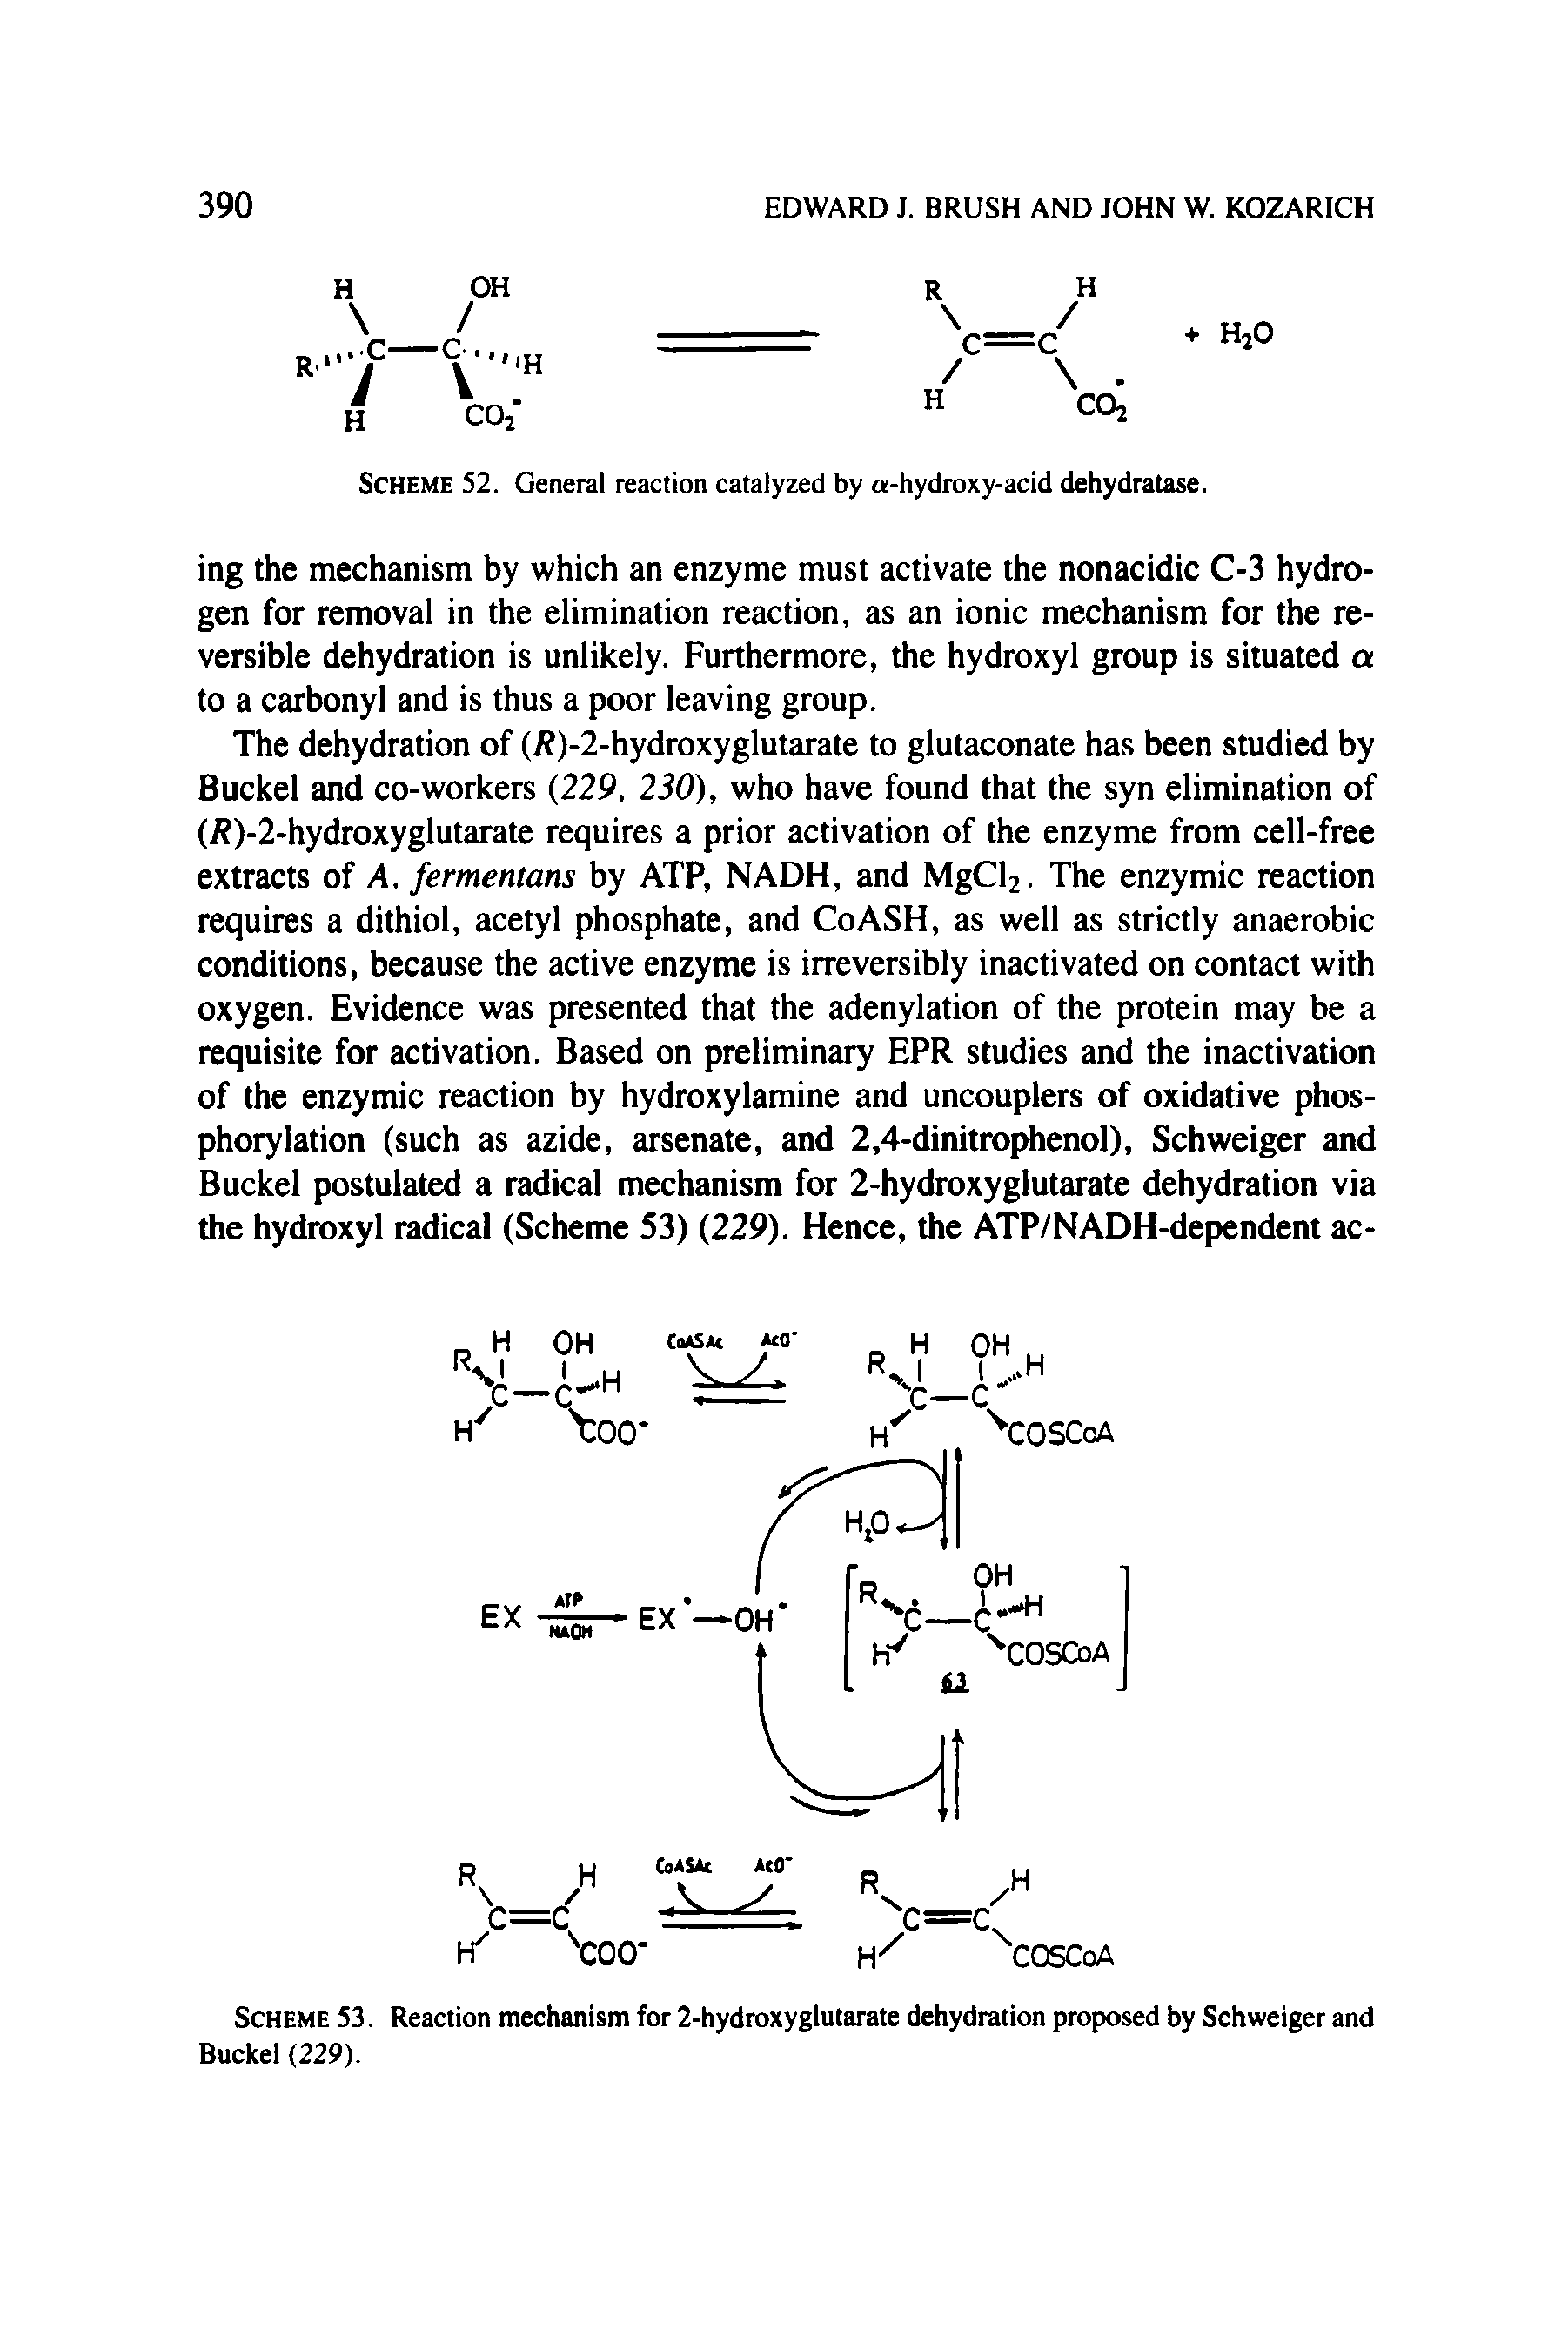 Scheme 52. General reaction catalyzed by a-hydroxy-acid dehydratase.